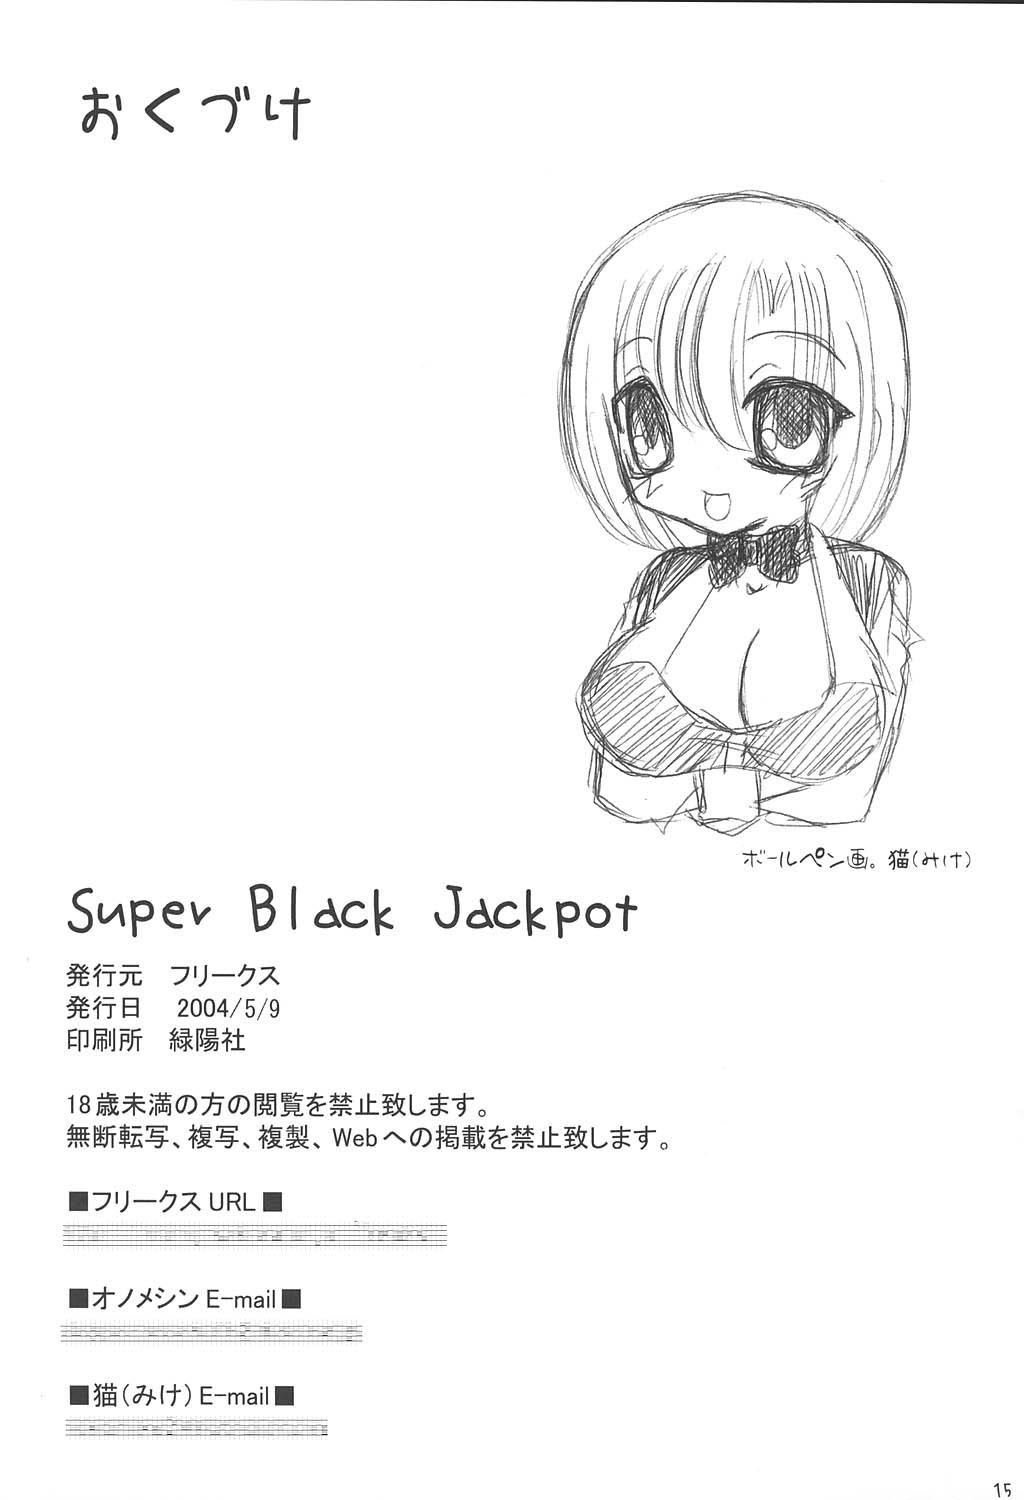 Super Black Jackpot 14